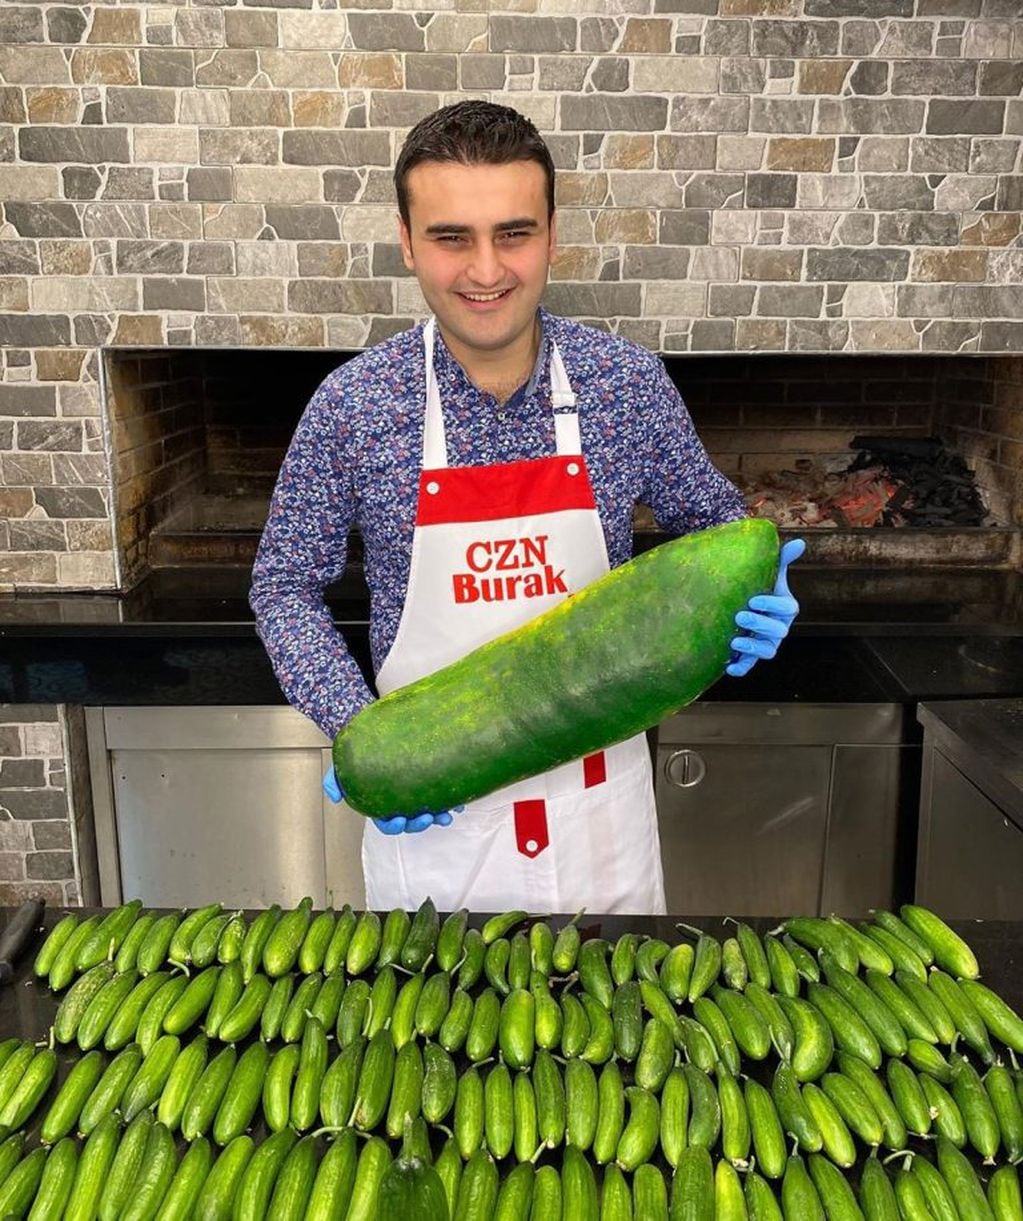 El chef Burak O¨zdemir